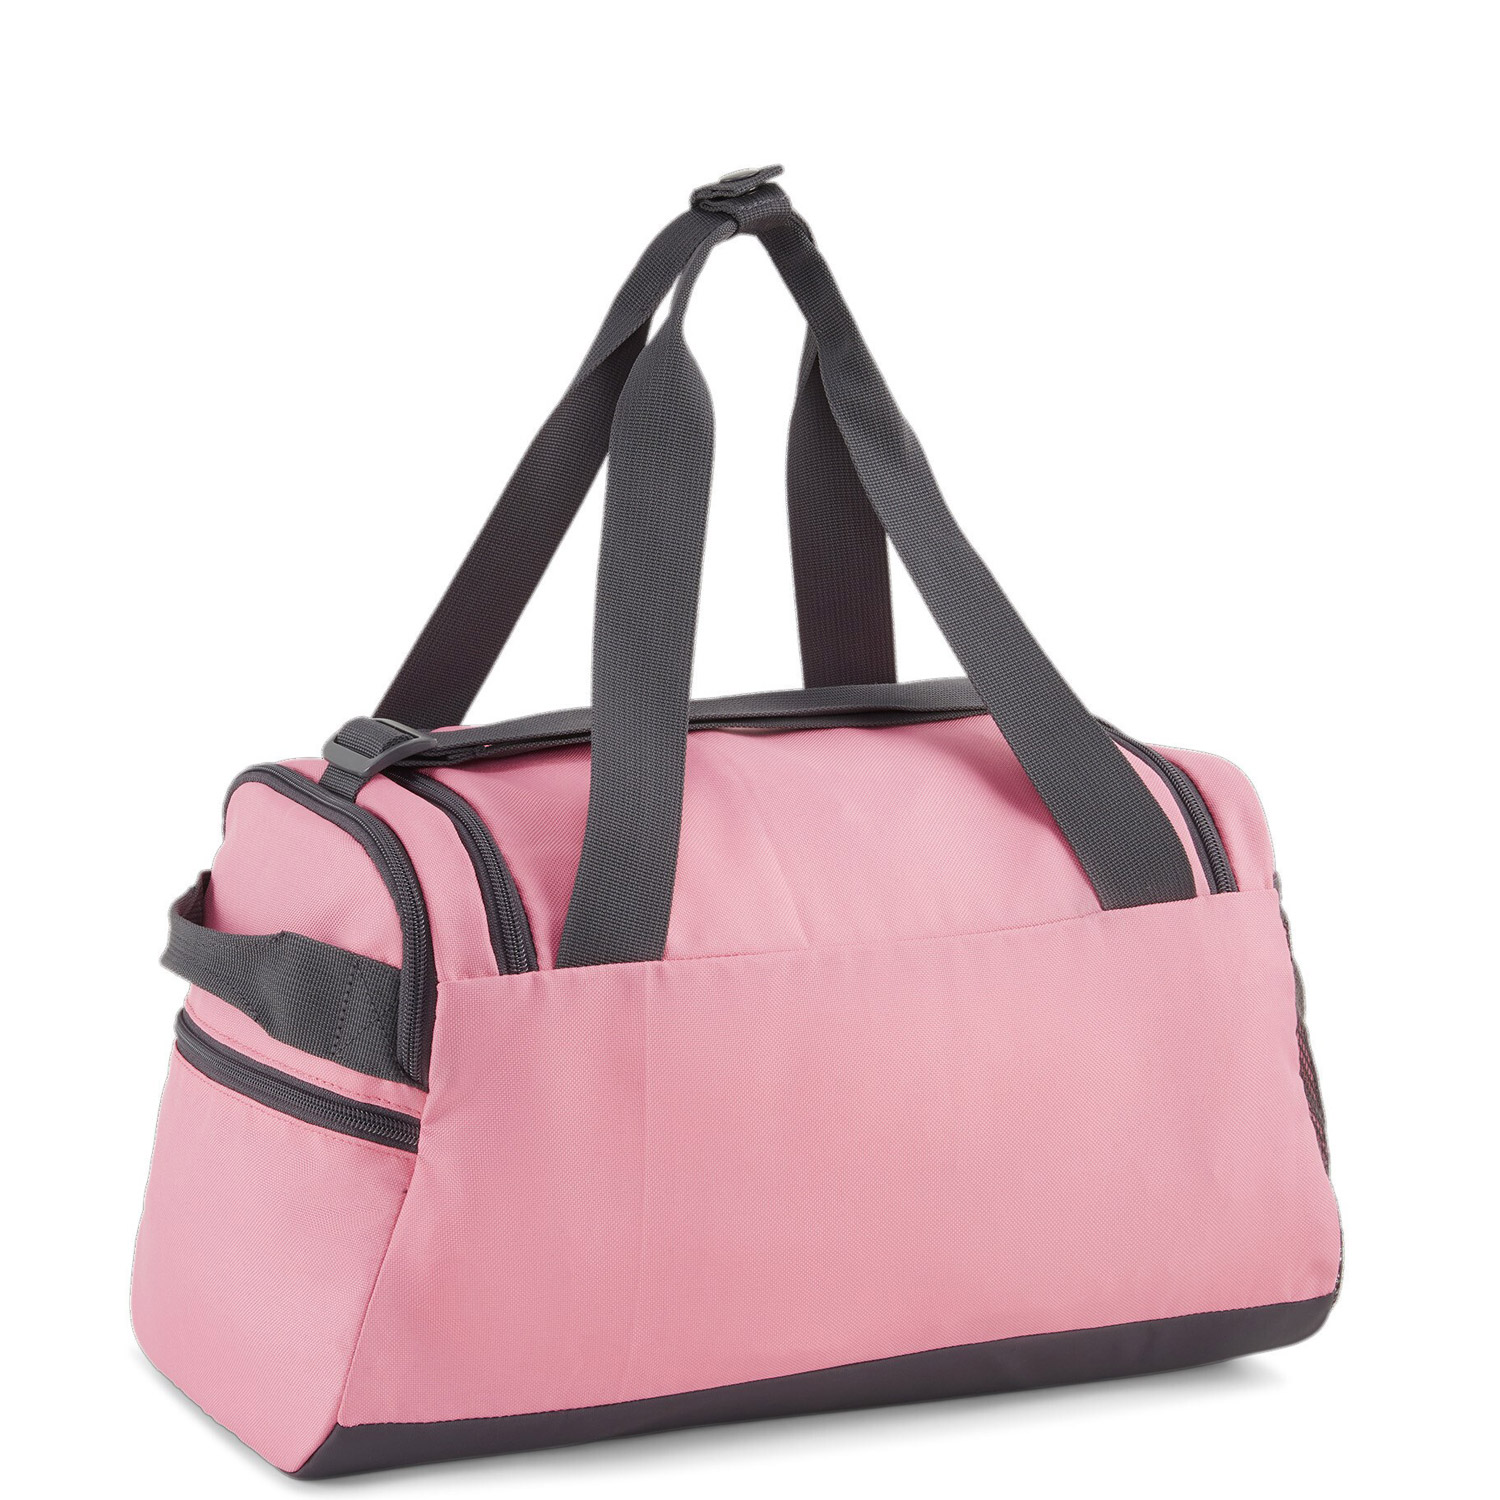 Puma Duffel Bag XS Challenger Fast Pink